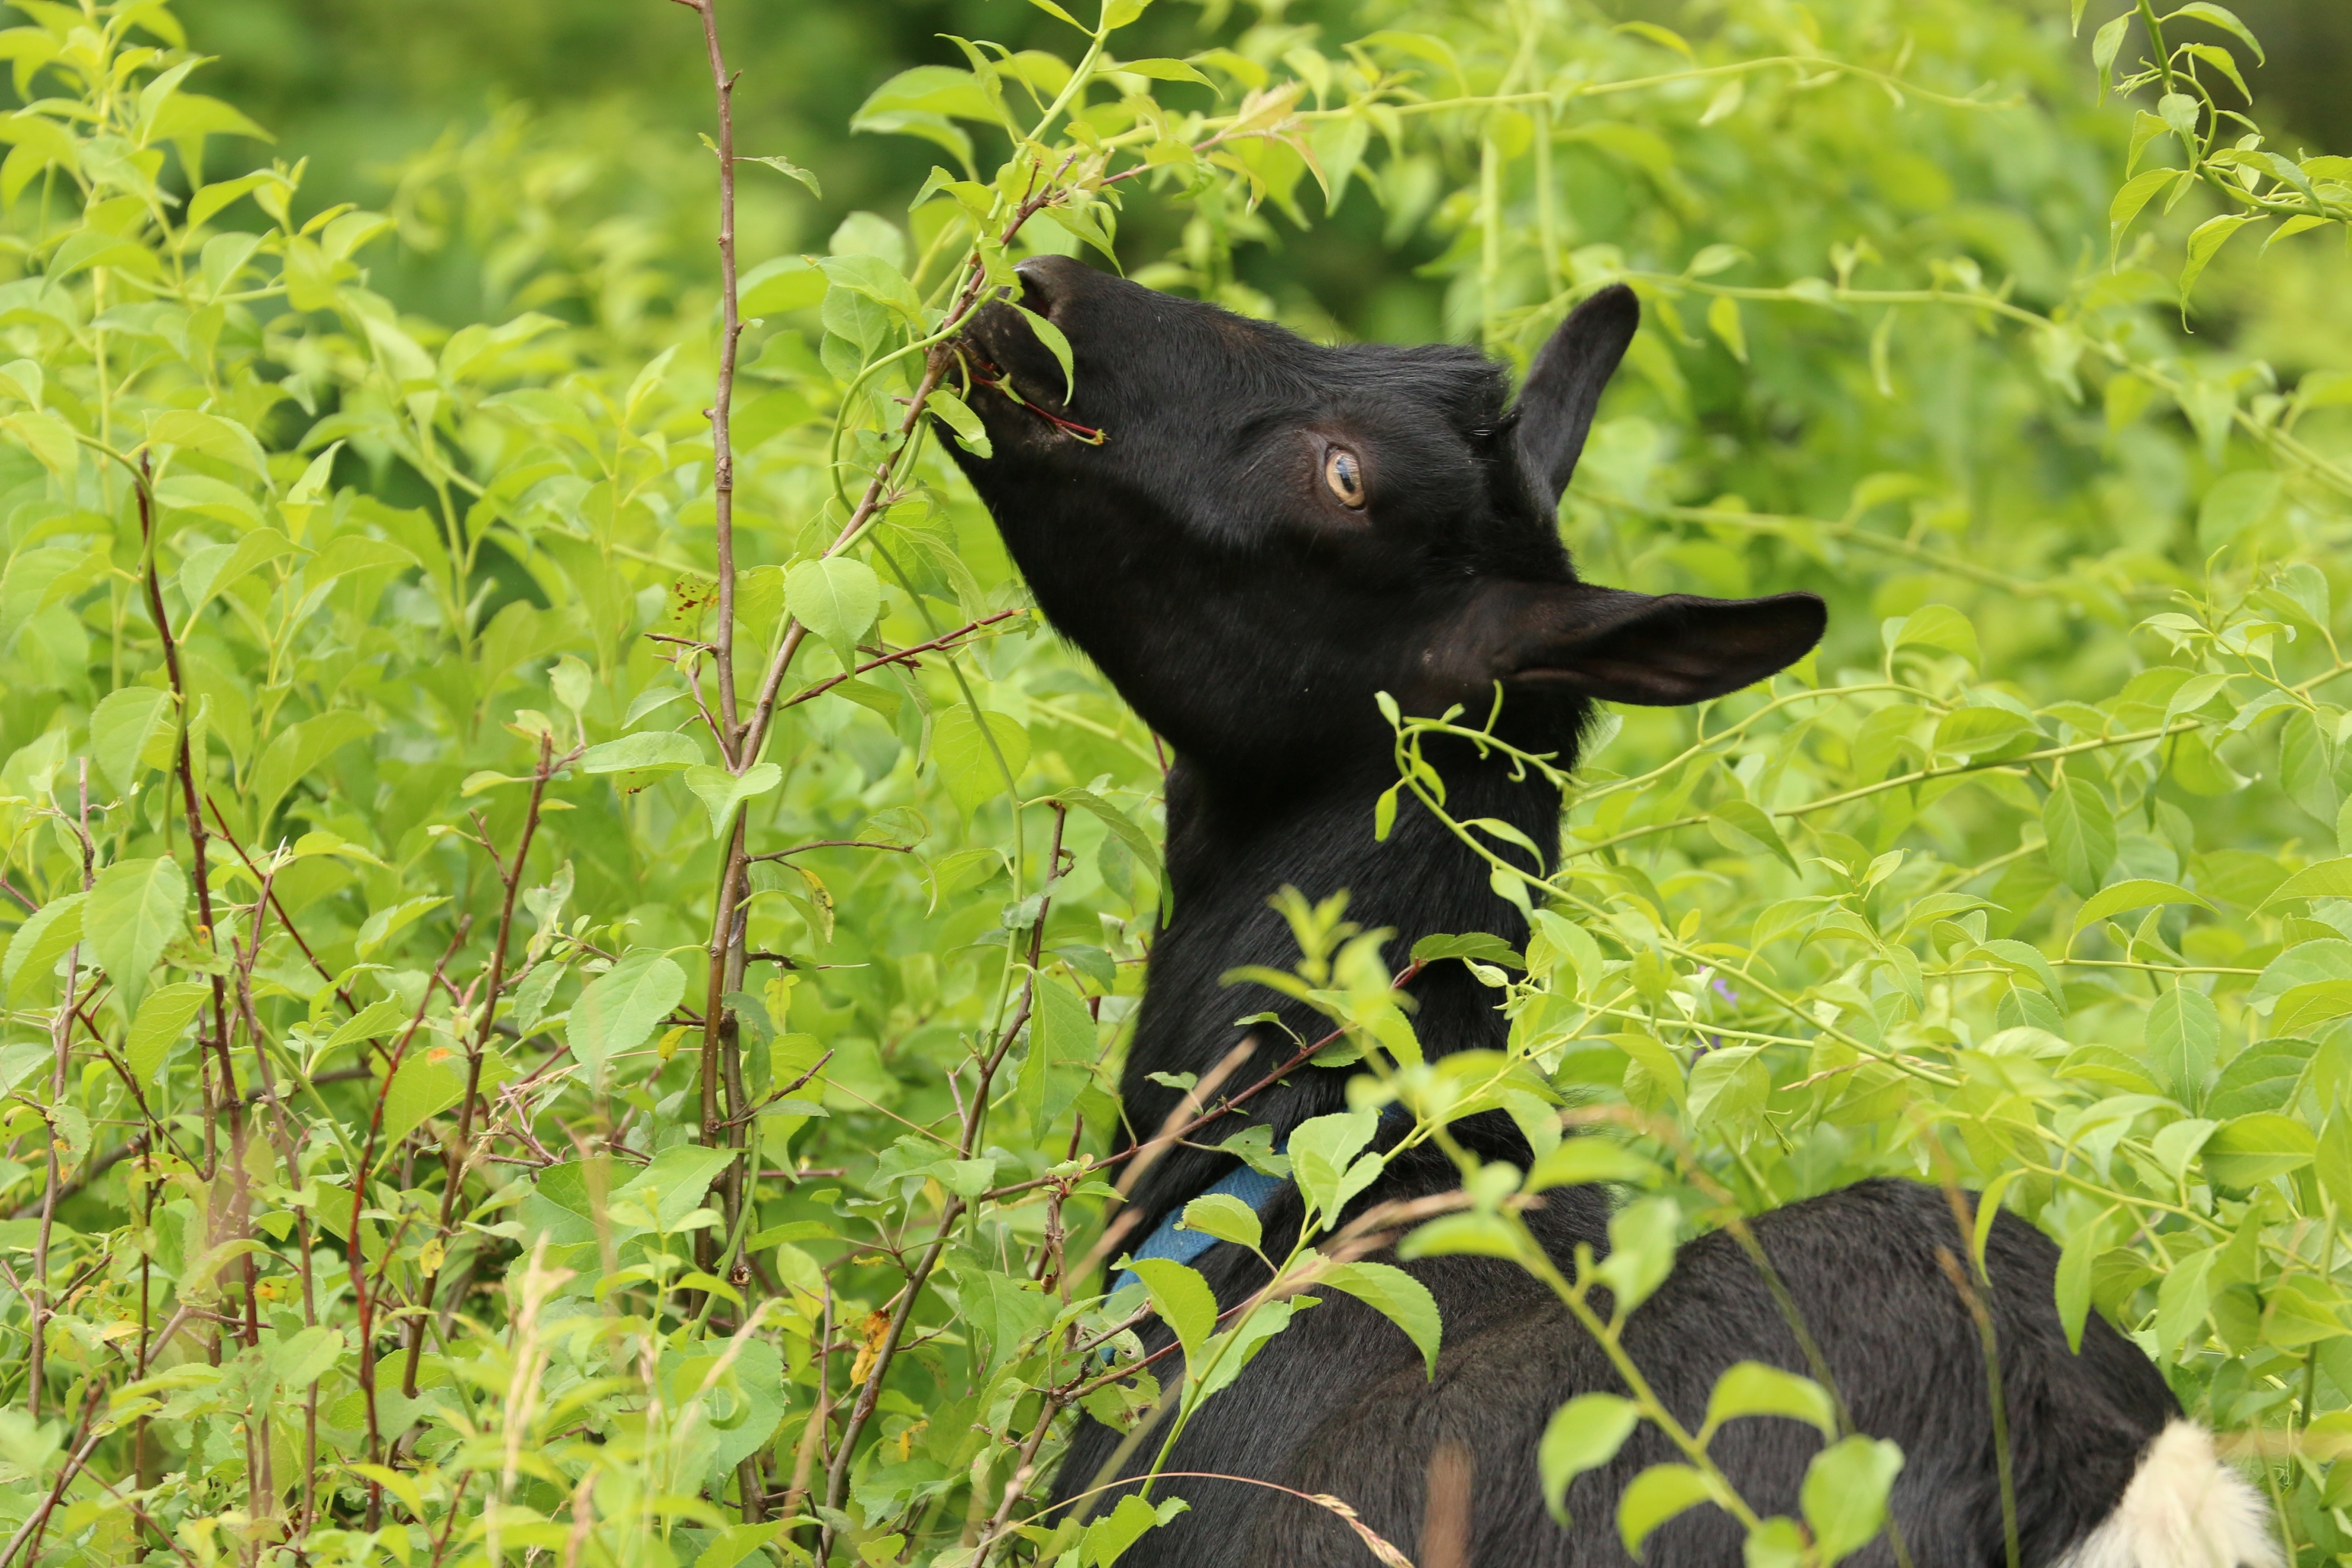 Black goat eating invasive species